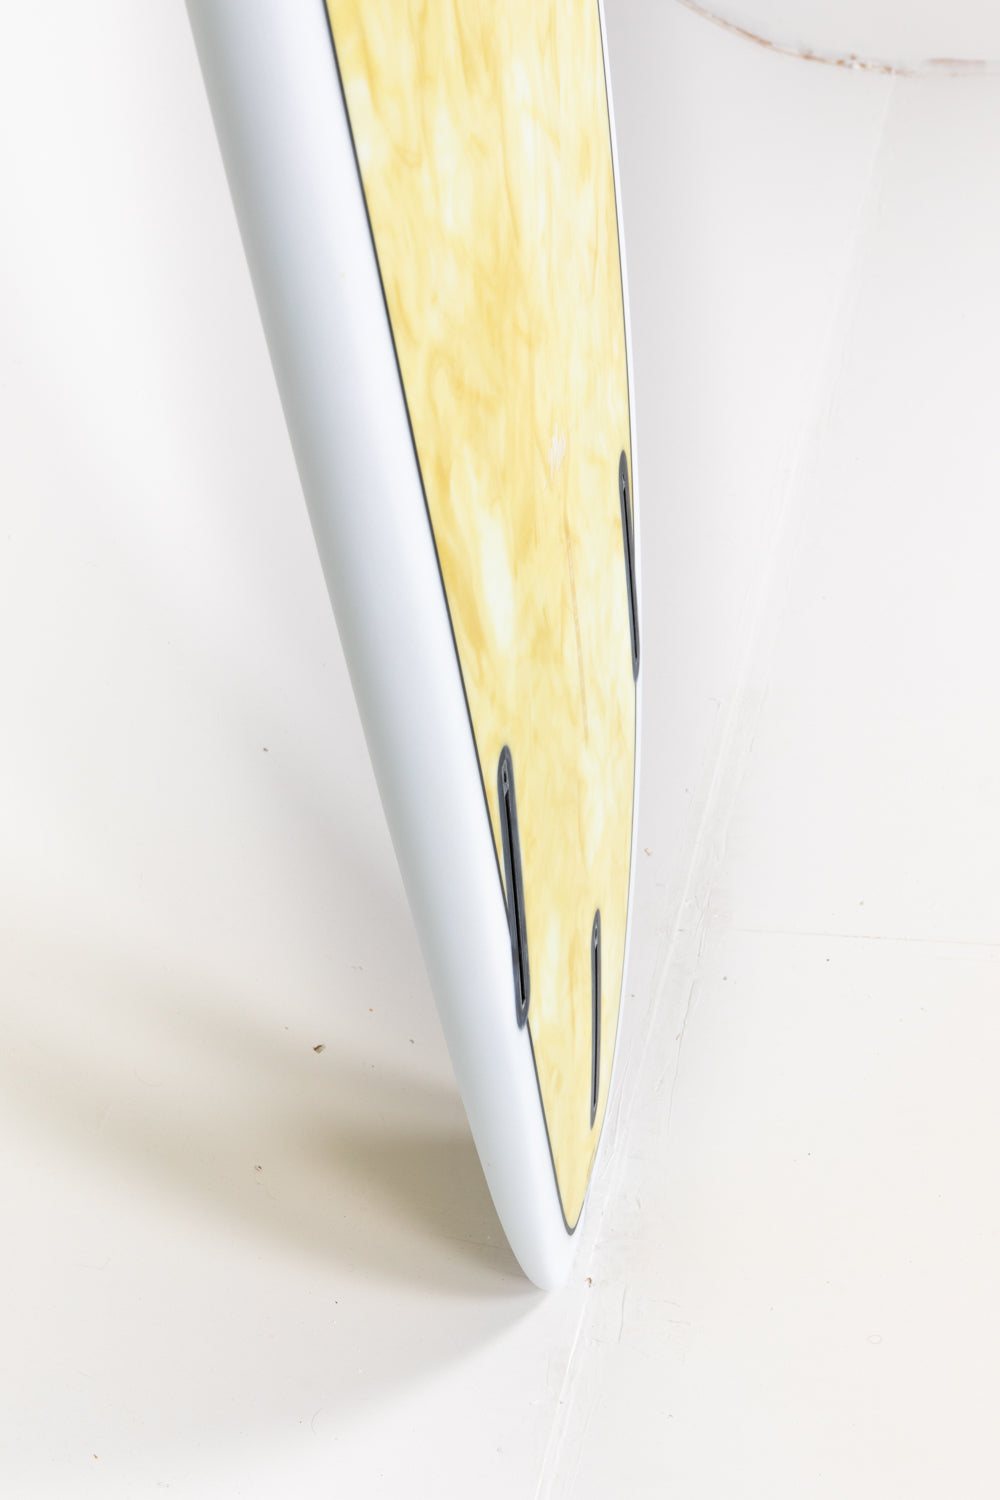 
                  
                    Pukas Surf Shop - Indio Endurance - PLUS Swirl Effect Yellow - 7´0" x 23 x 3 1/2- 68L
                  
                